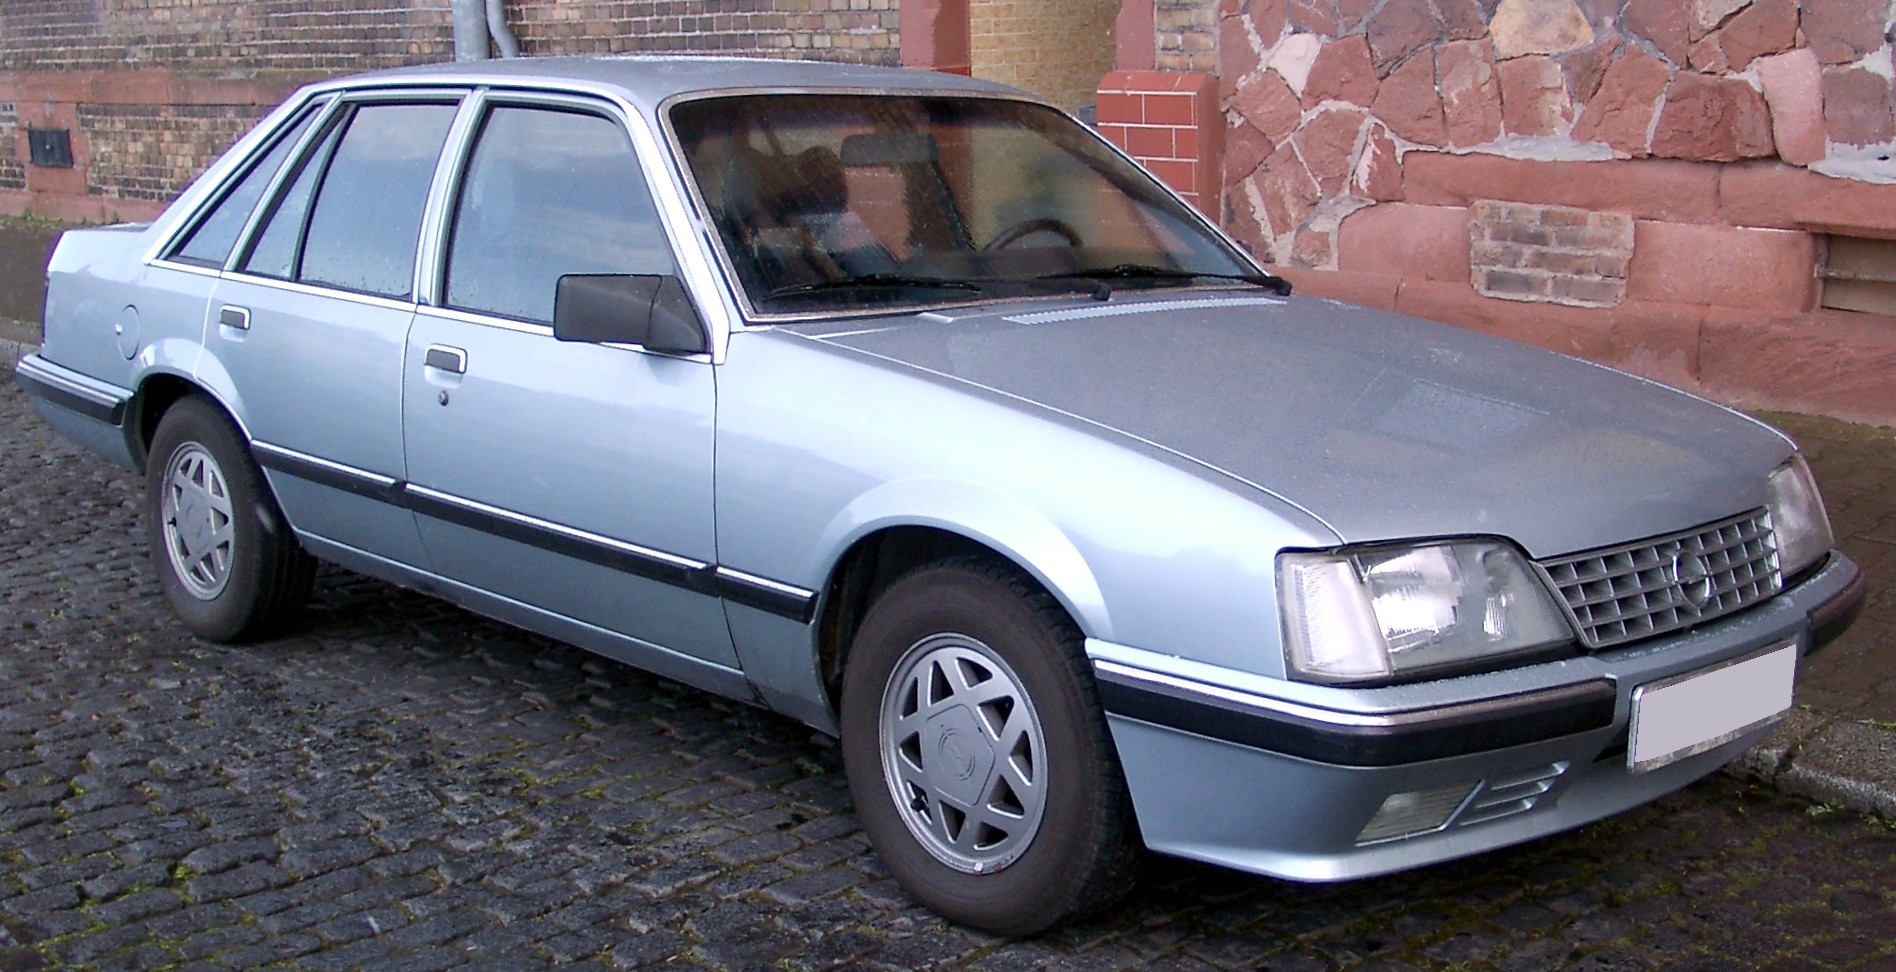 File:Opel Senator front 20080303.jpg - Wikimedia Commons